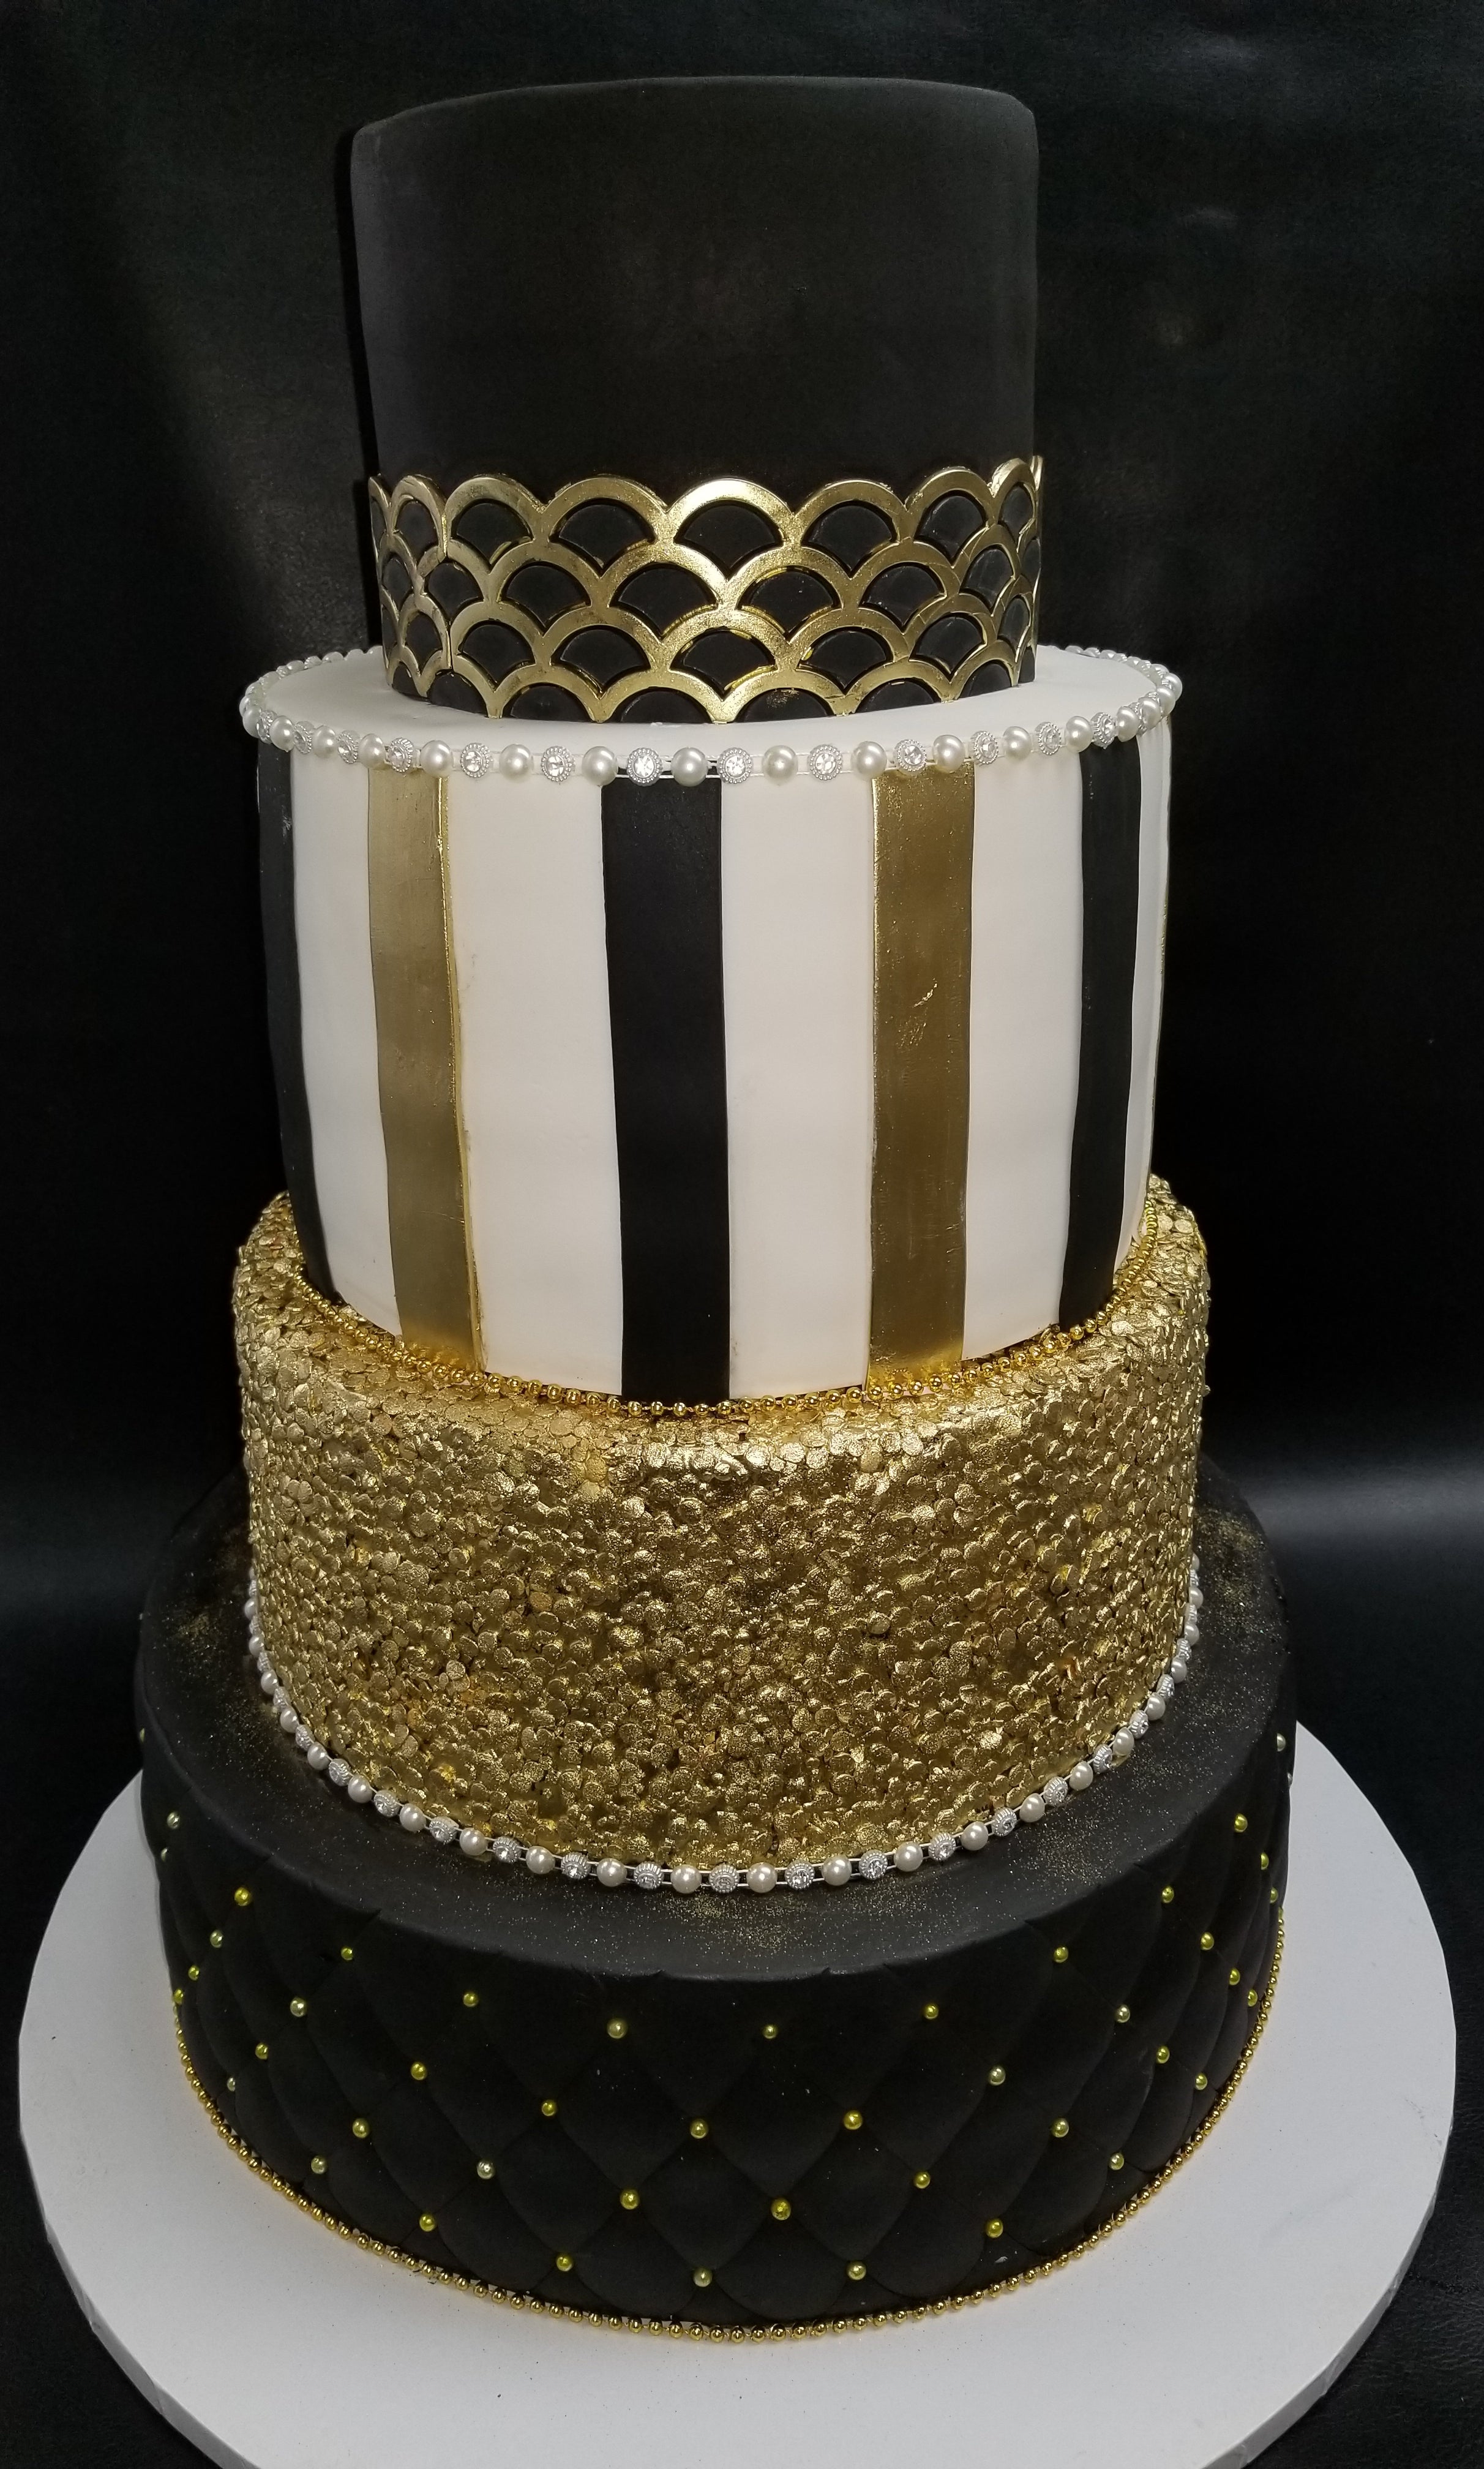 Elegant birthday cake in black & gold - Decorated Cake by - CakesDecor